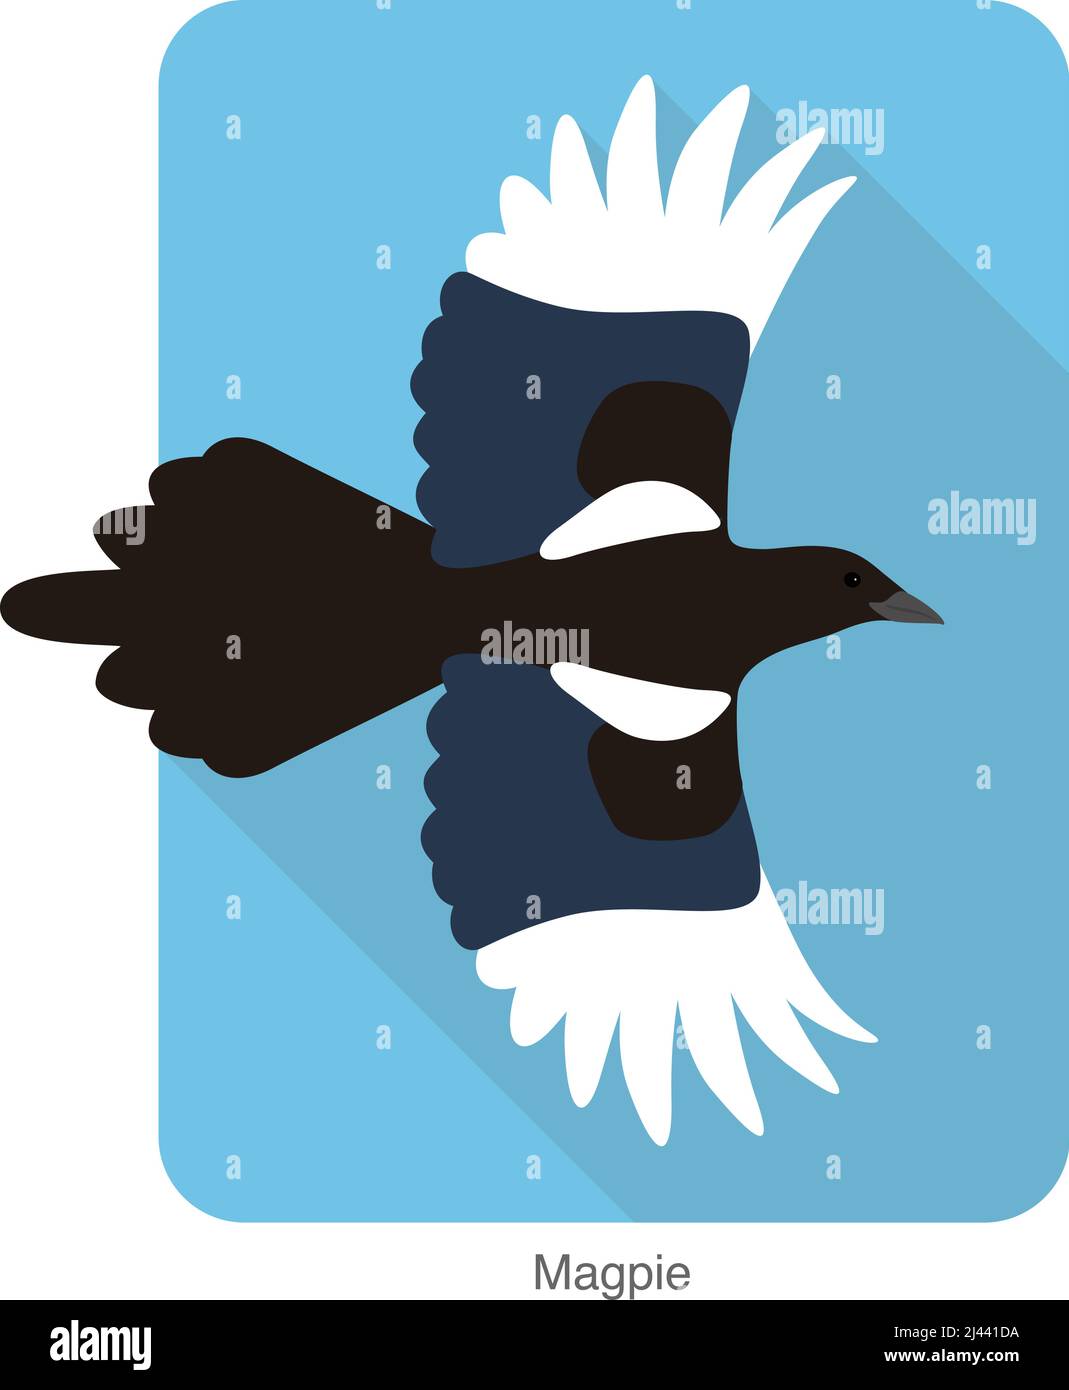 Magpie bird flying in the sky, vector illustration Stock Vector